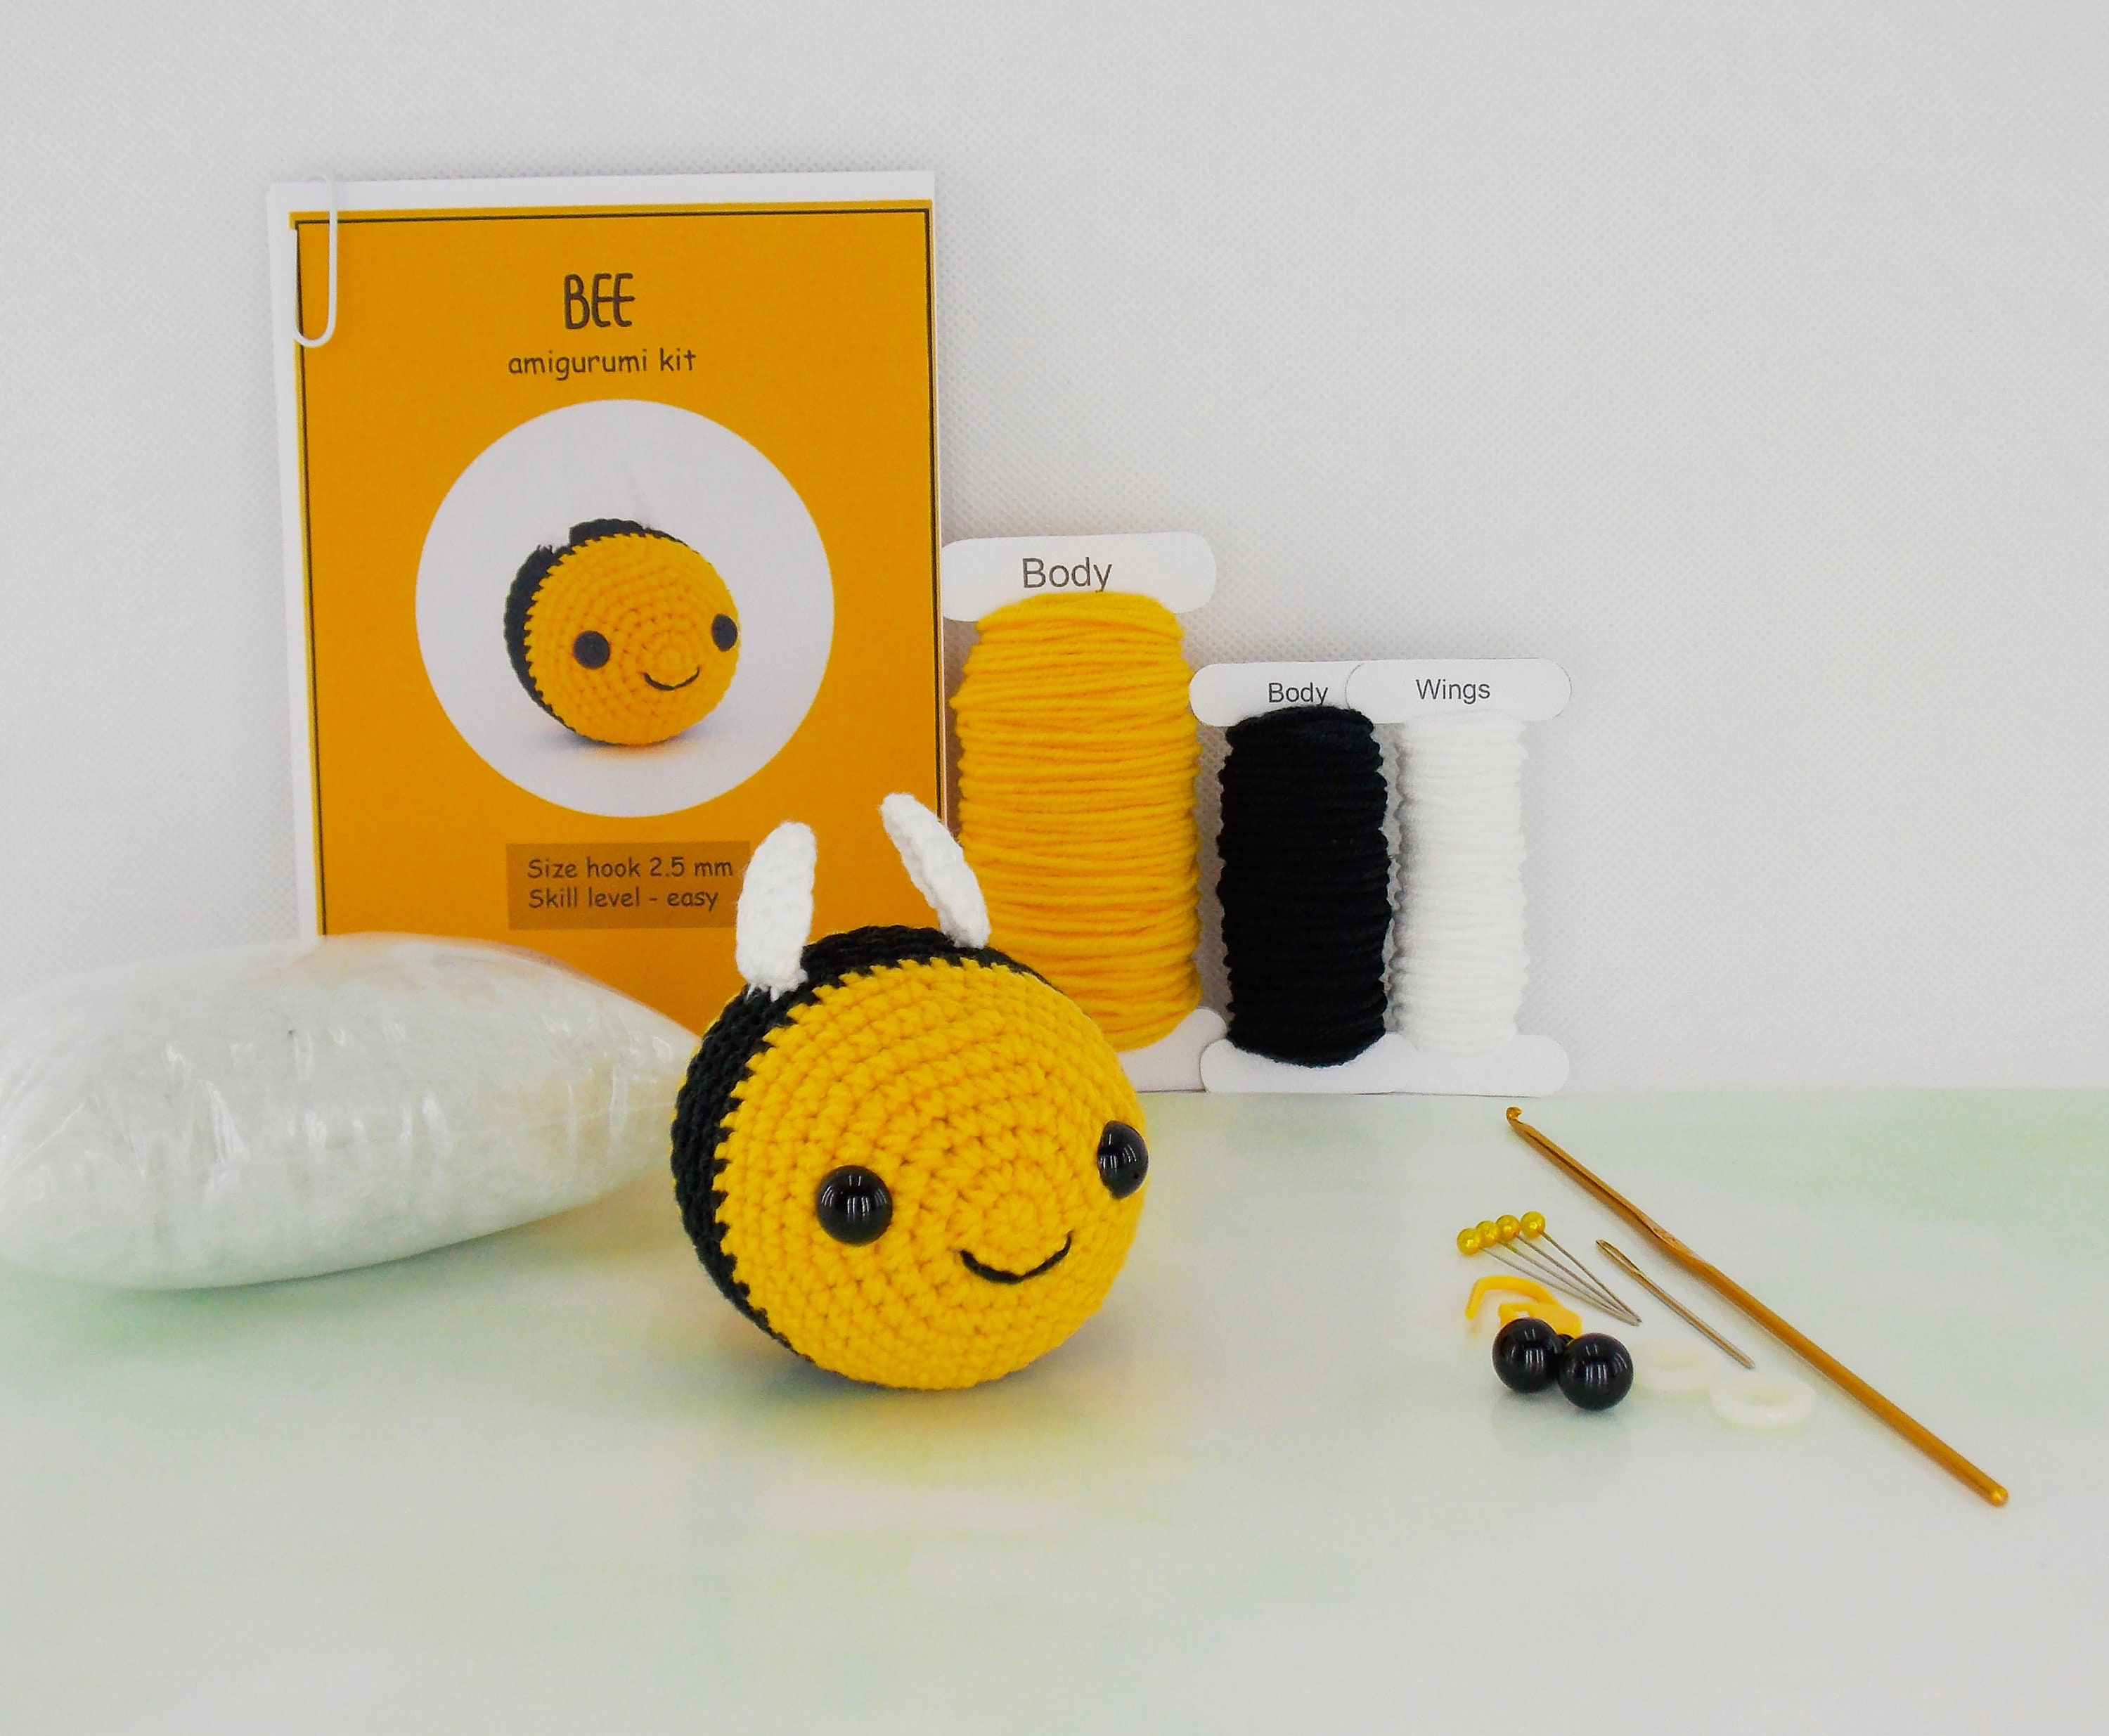 Kit Starter - Kit pour apprendre les bases du crochet - Niveau